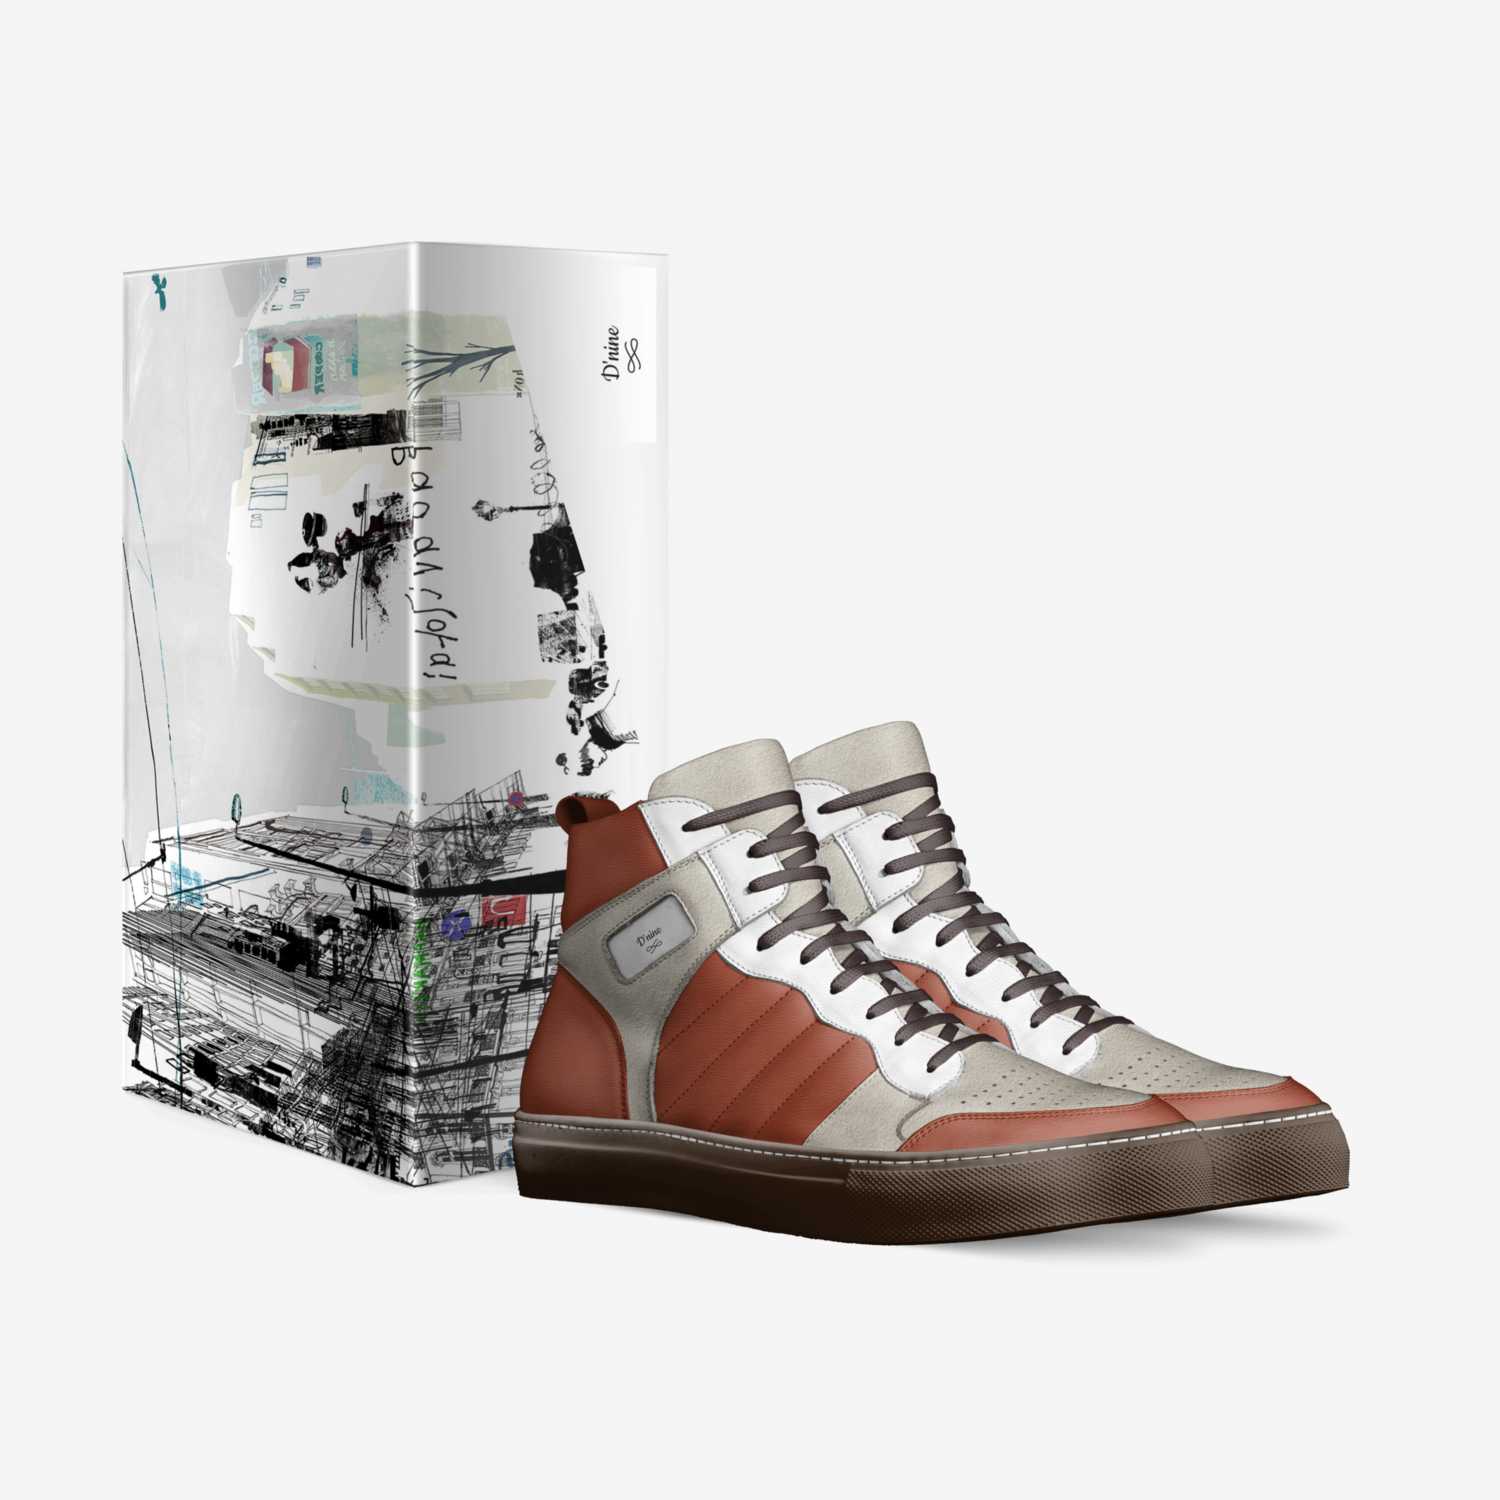 D'nine custom made in Italy shoes by Kiwandra Polk | Box view